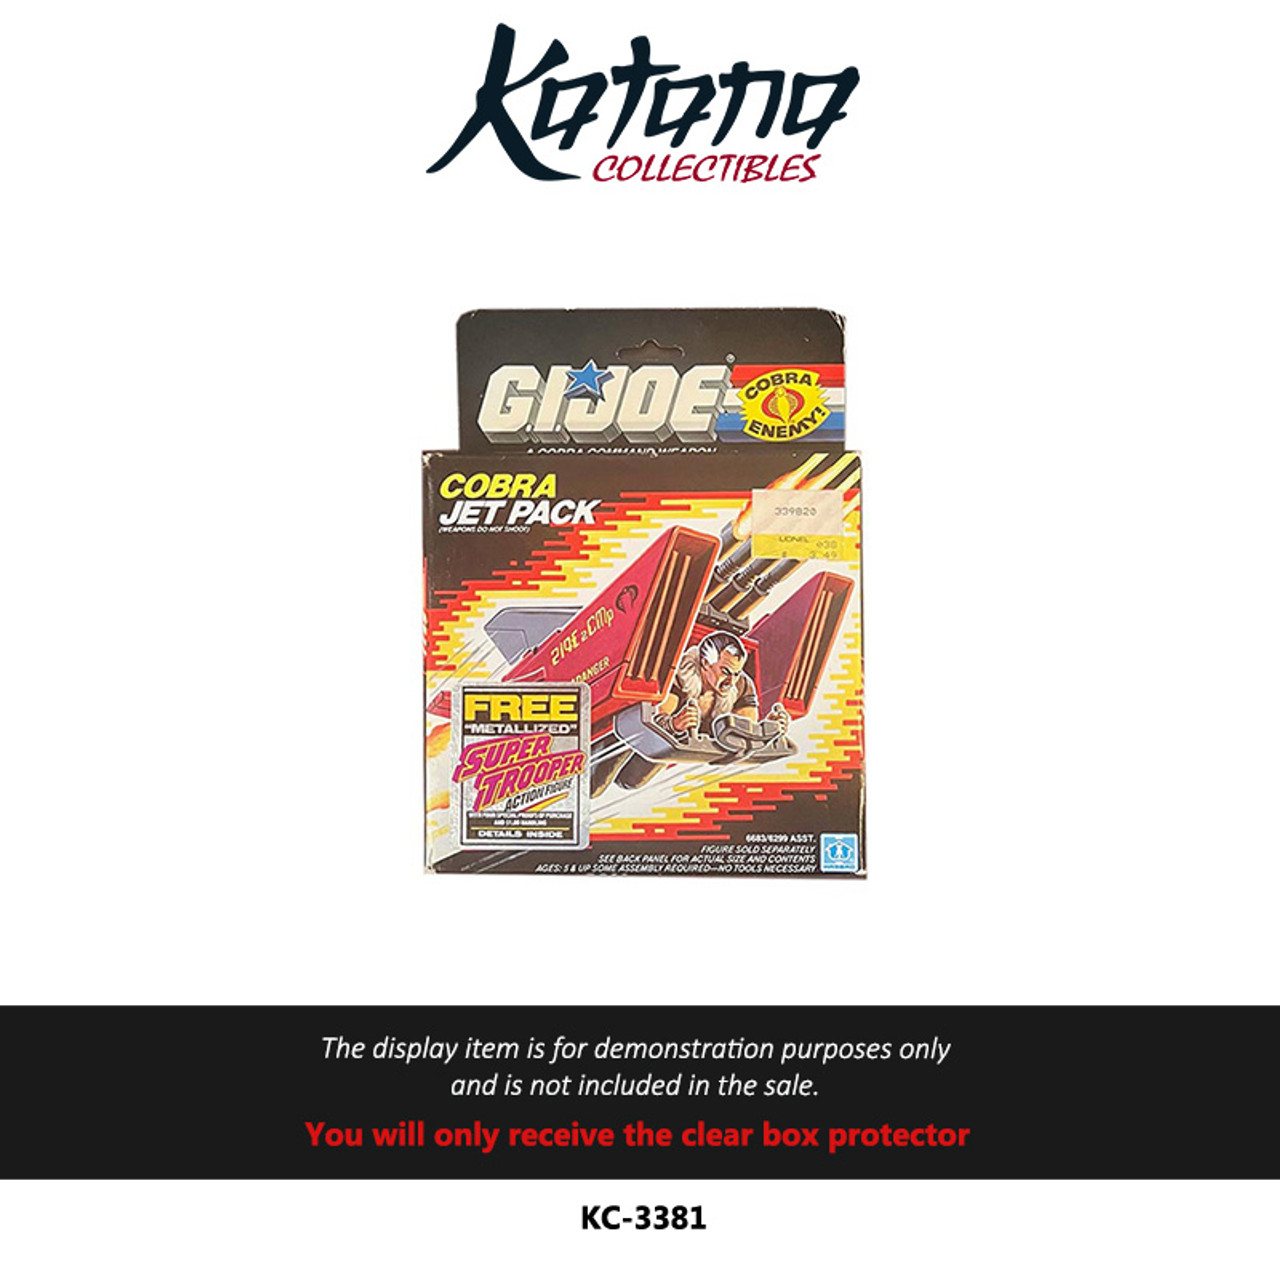 Katana Collectibles Protector For G.I.Joe Cobra Jet Pack